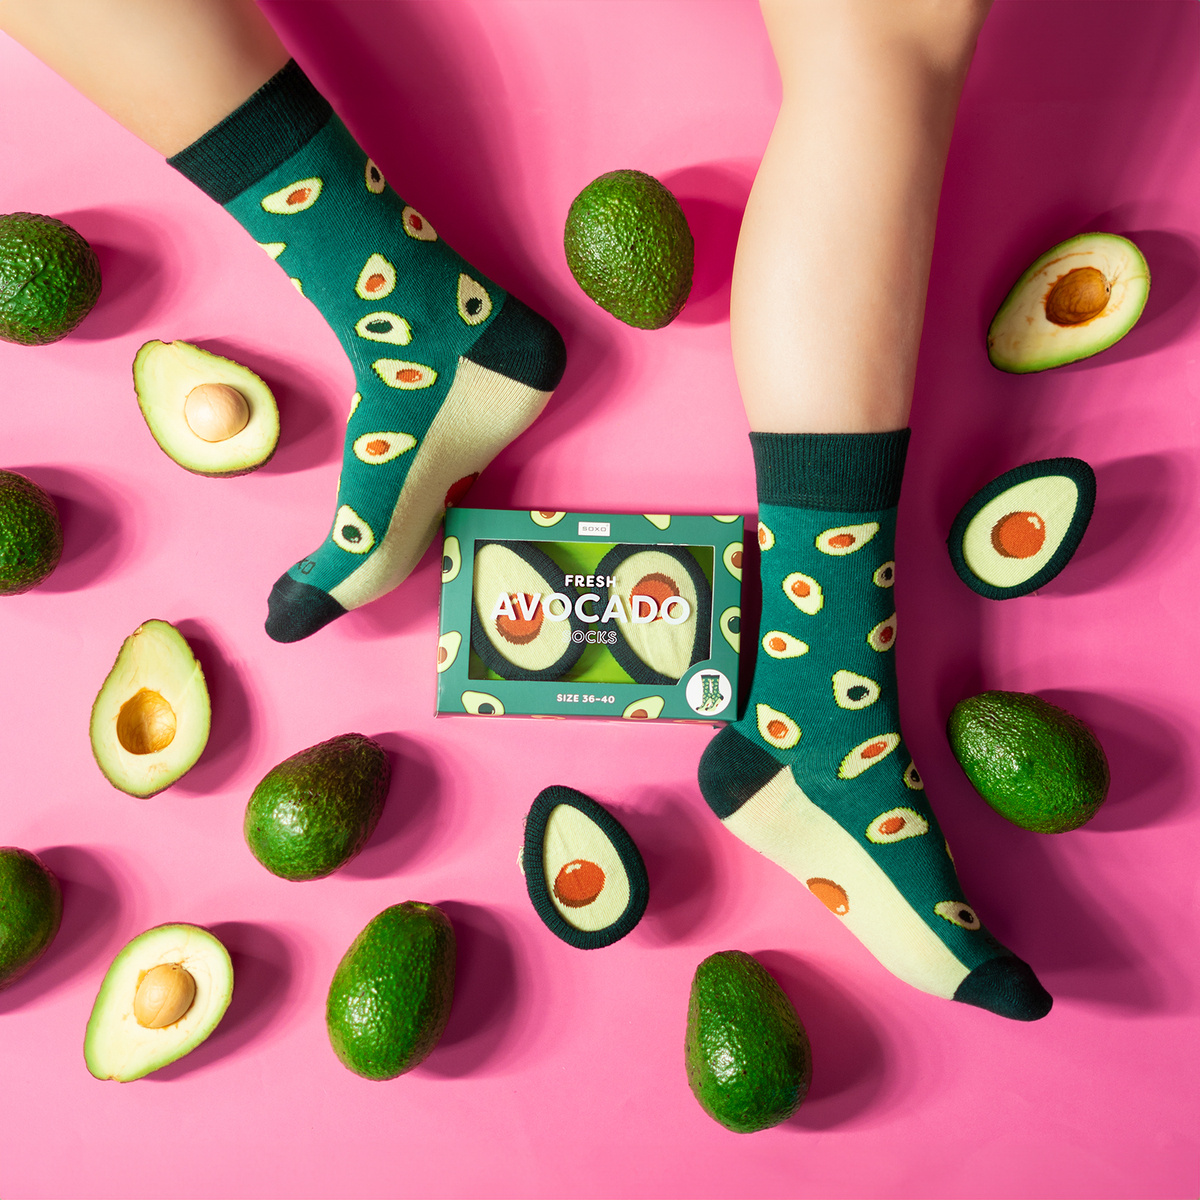 Damensocken | Herrensocken SOXO | Avocado in einer Box | lustige Geschenkidee